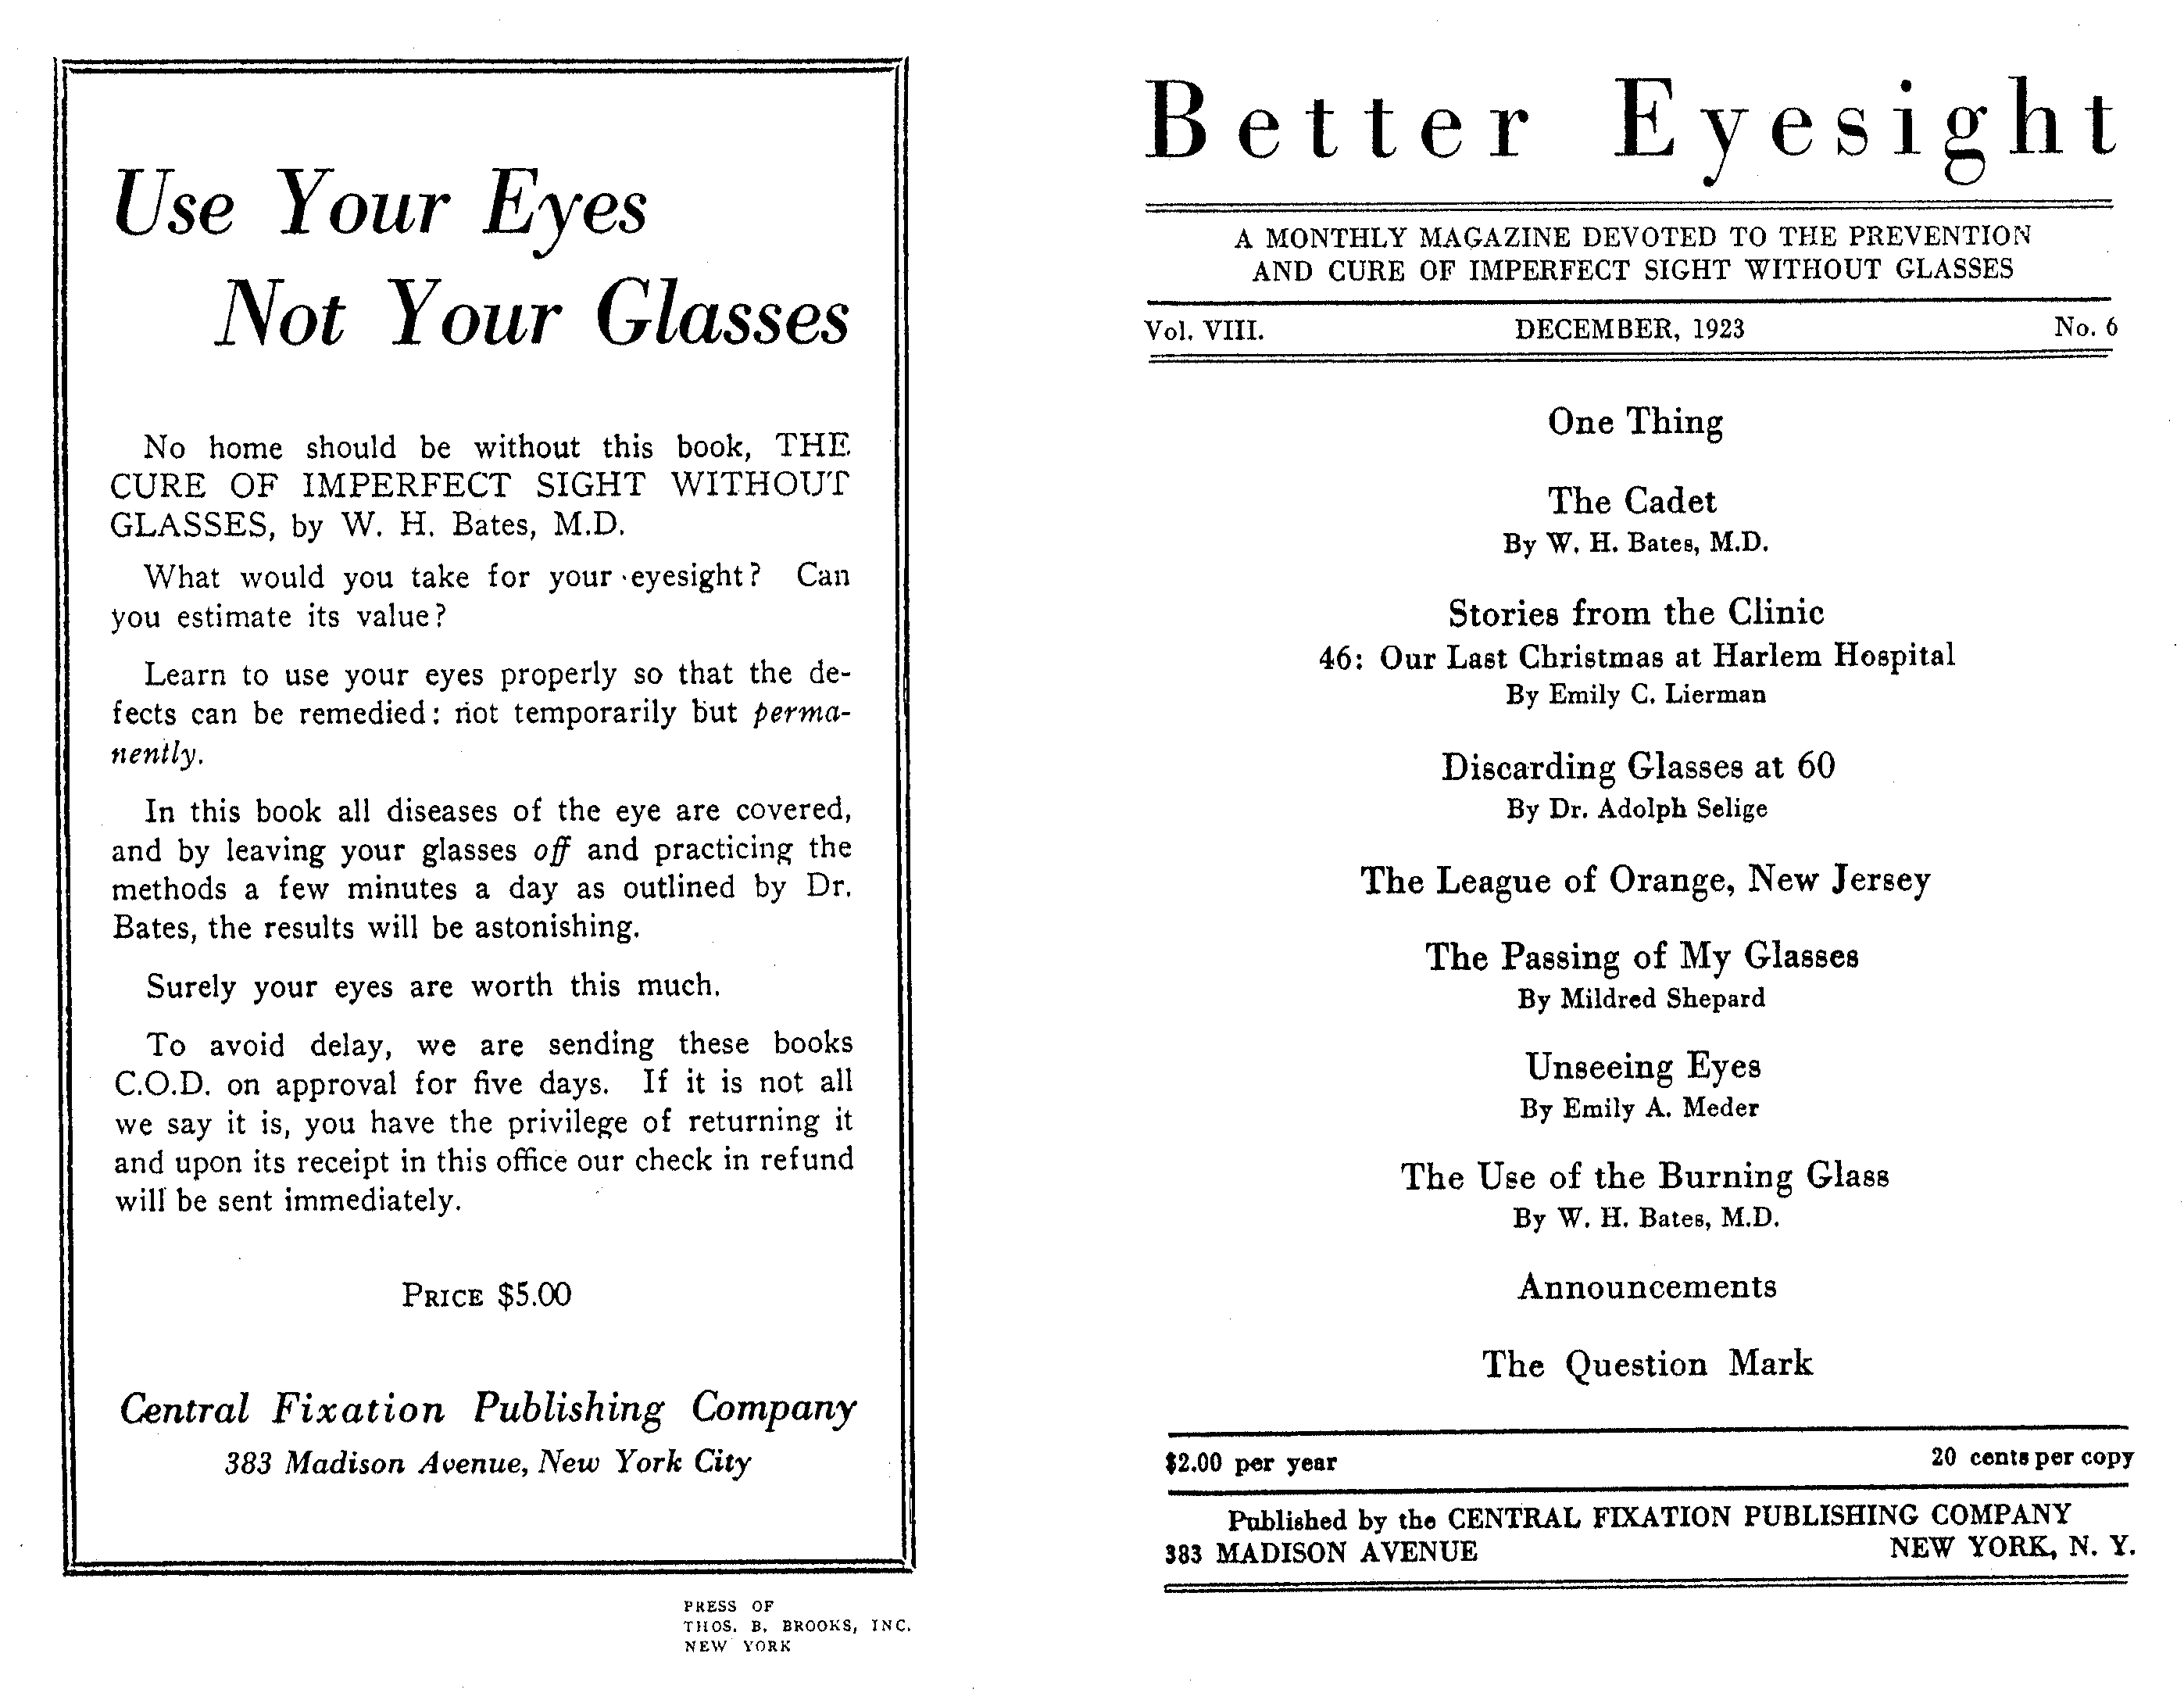 Better Eyesight, Dec. 1923 - 1